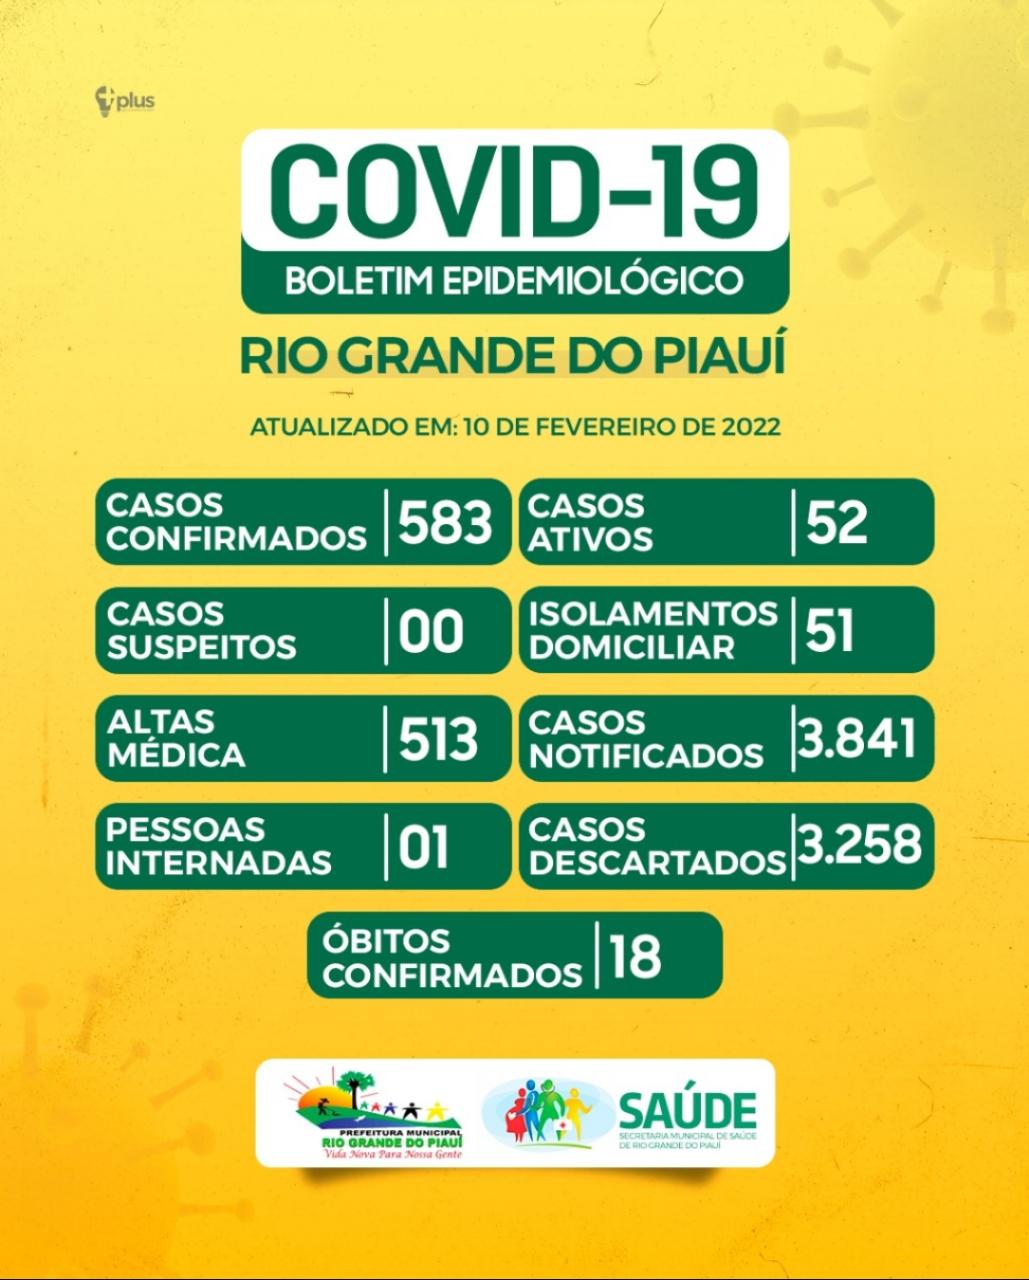  BOLETIM EPIDEMIOLÓGICO - COVID-19 - RIO GRANDE 10.02.22